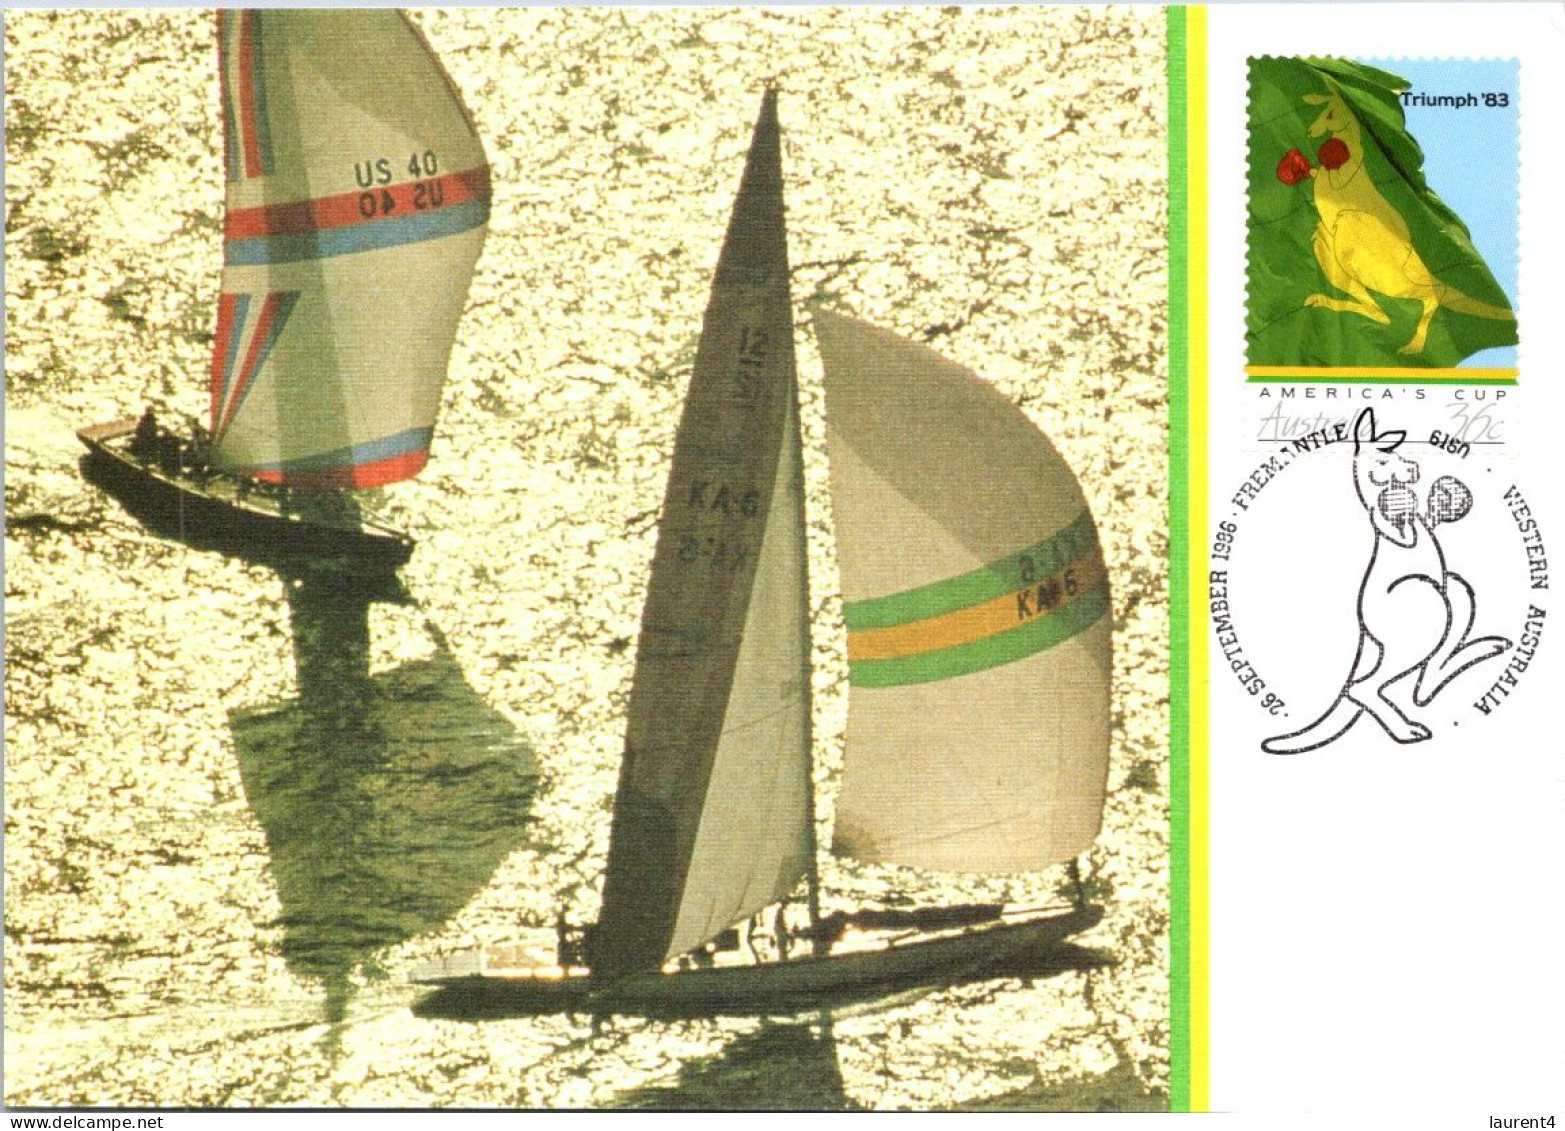 7-5-2024 (4 Z 30) Australia - America Cuo Triomph 1983 (sailing) 7 Postcards - Sailing